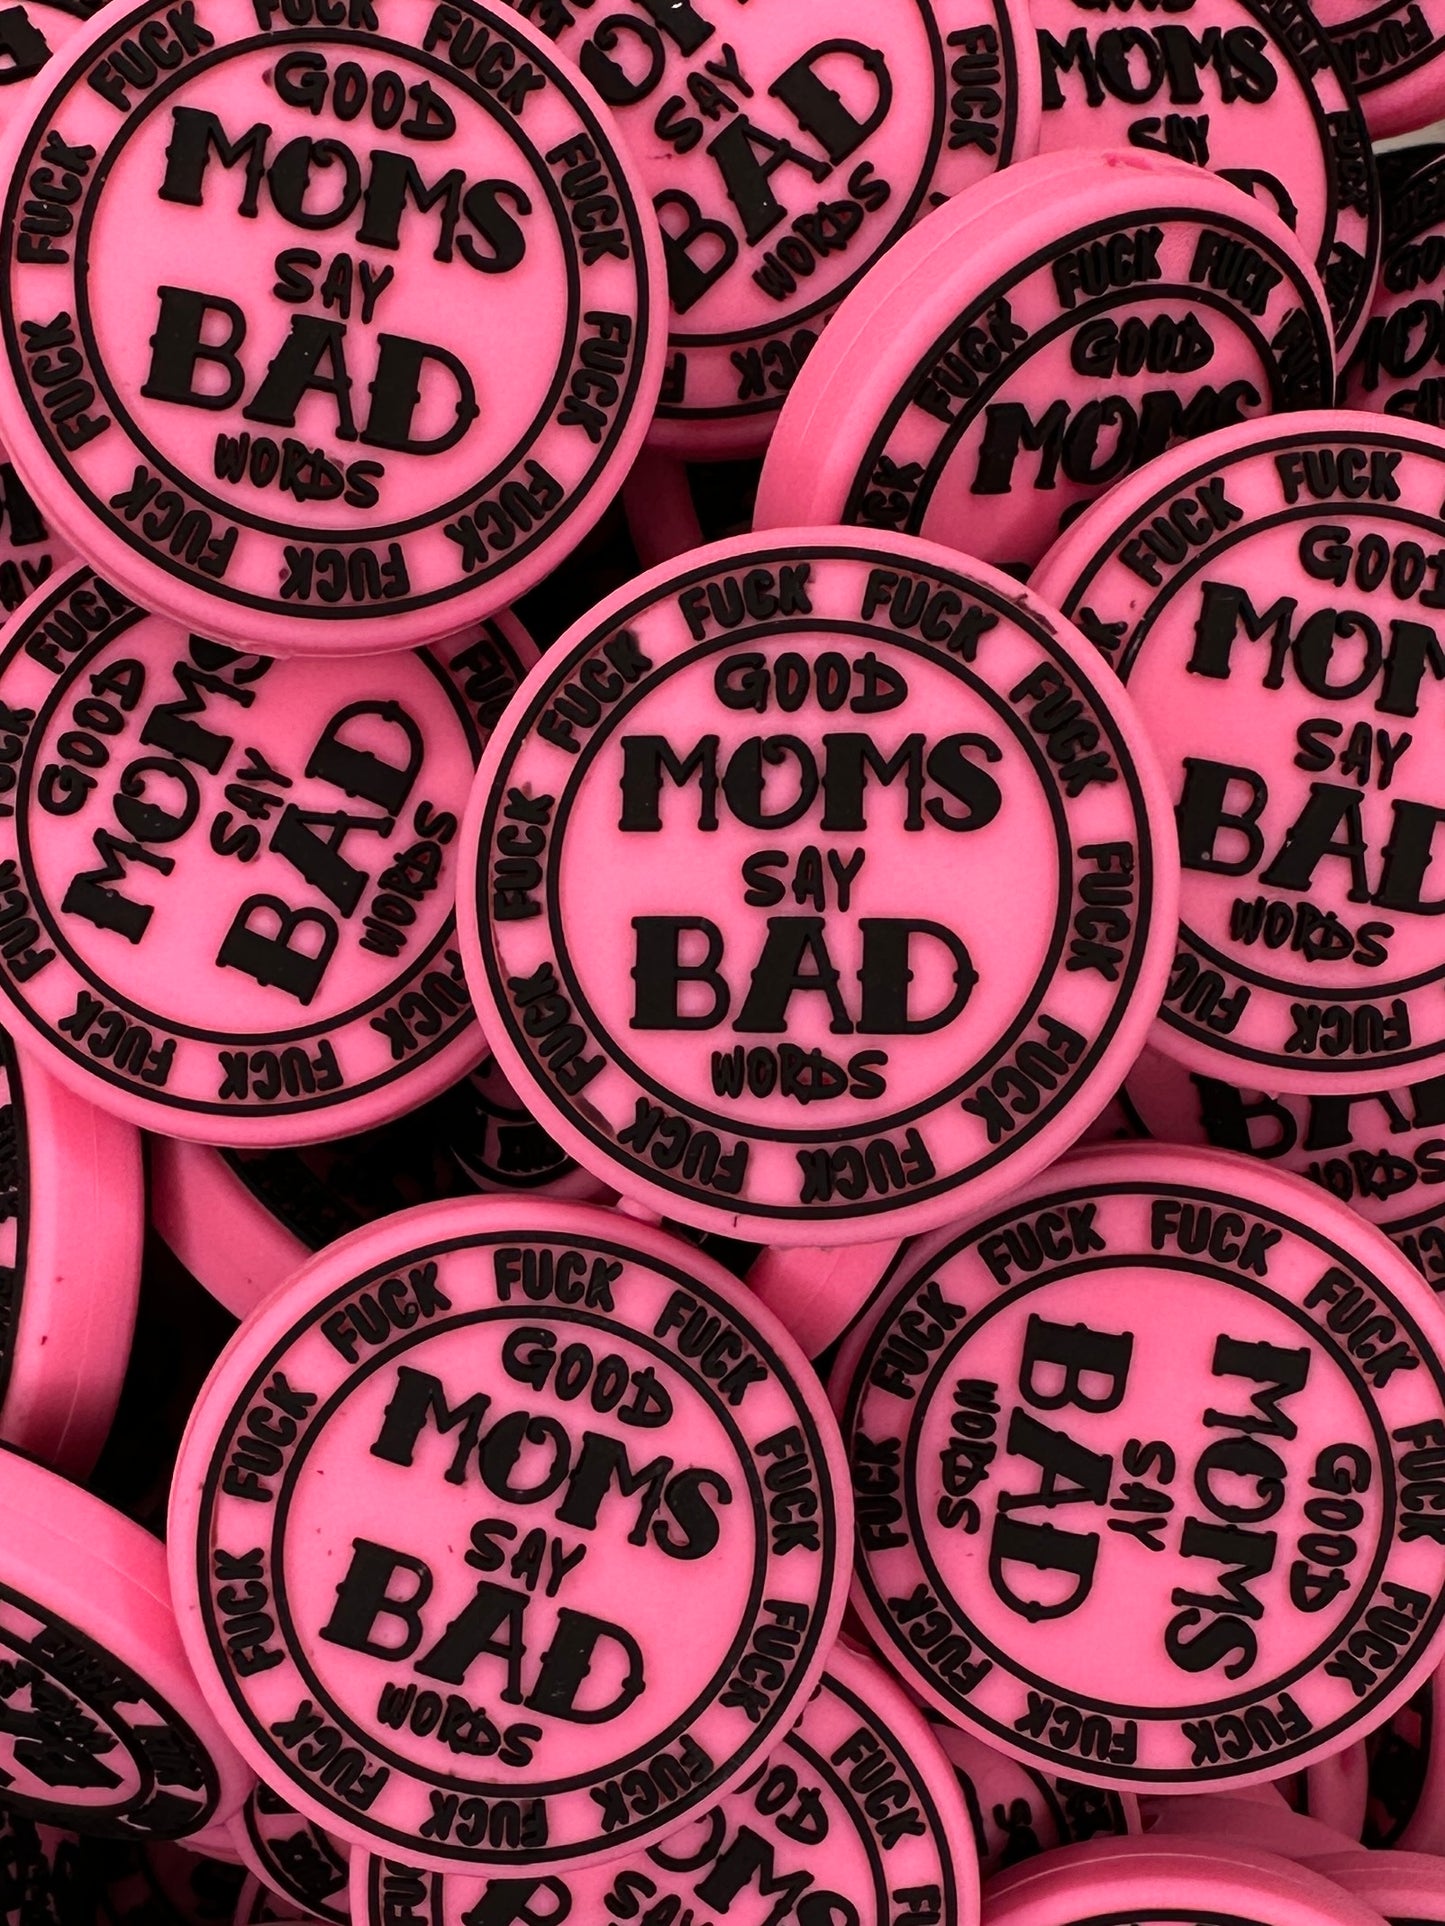 CTS Creation: Good Moms Say Bad Words Focal Bead